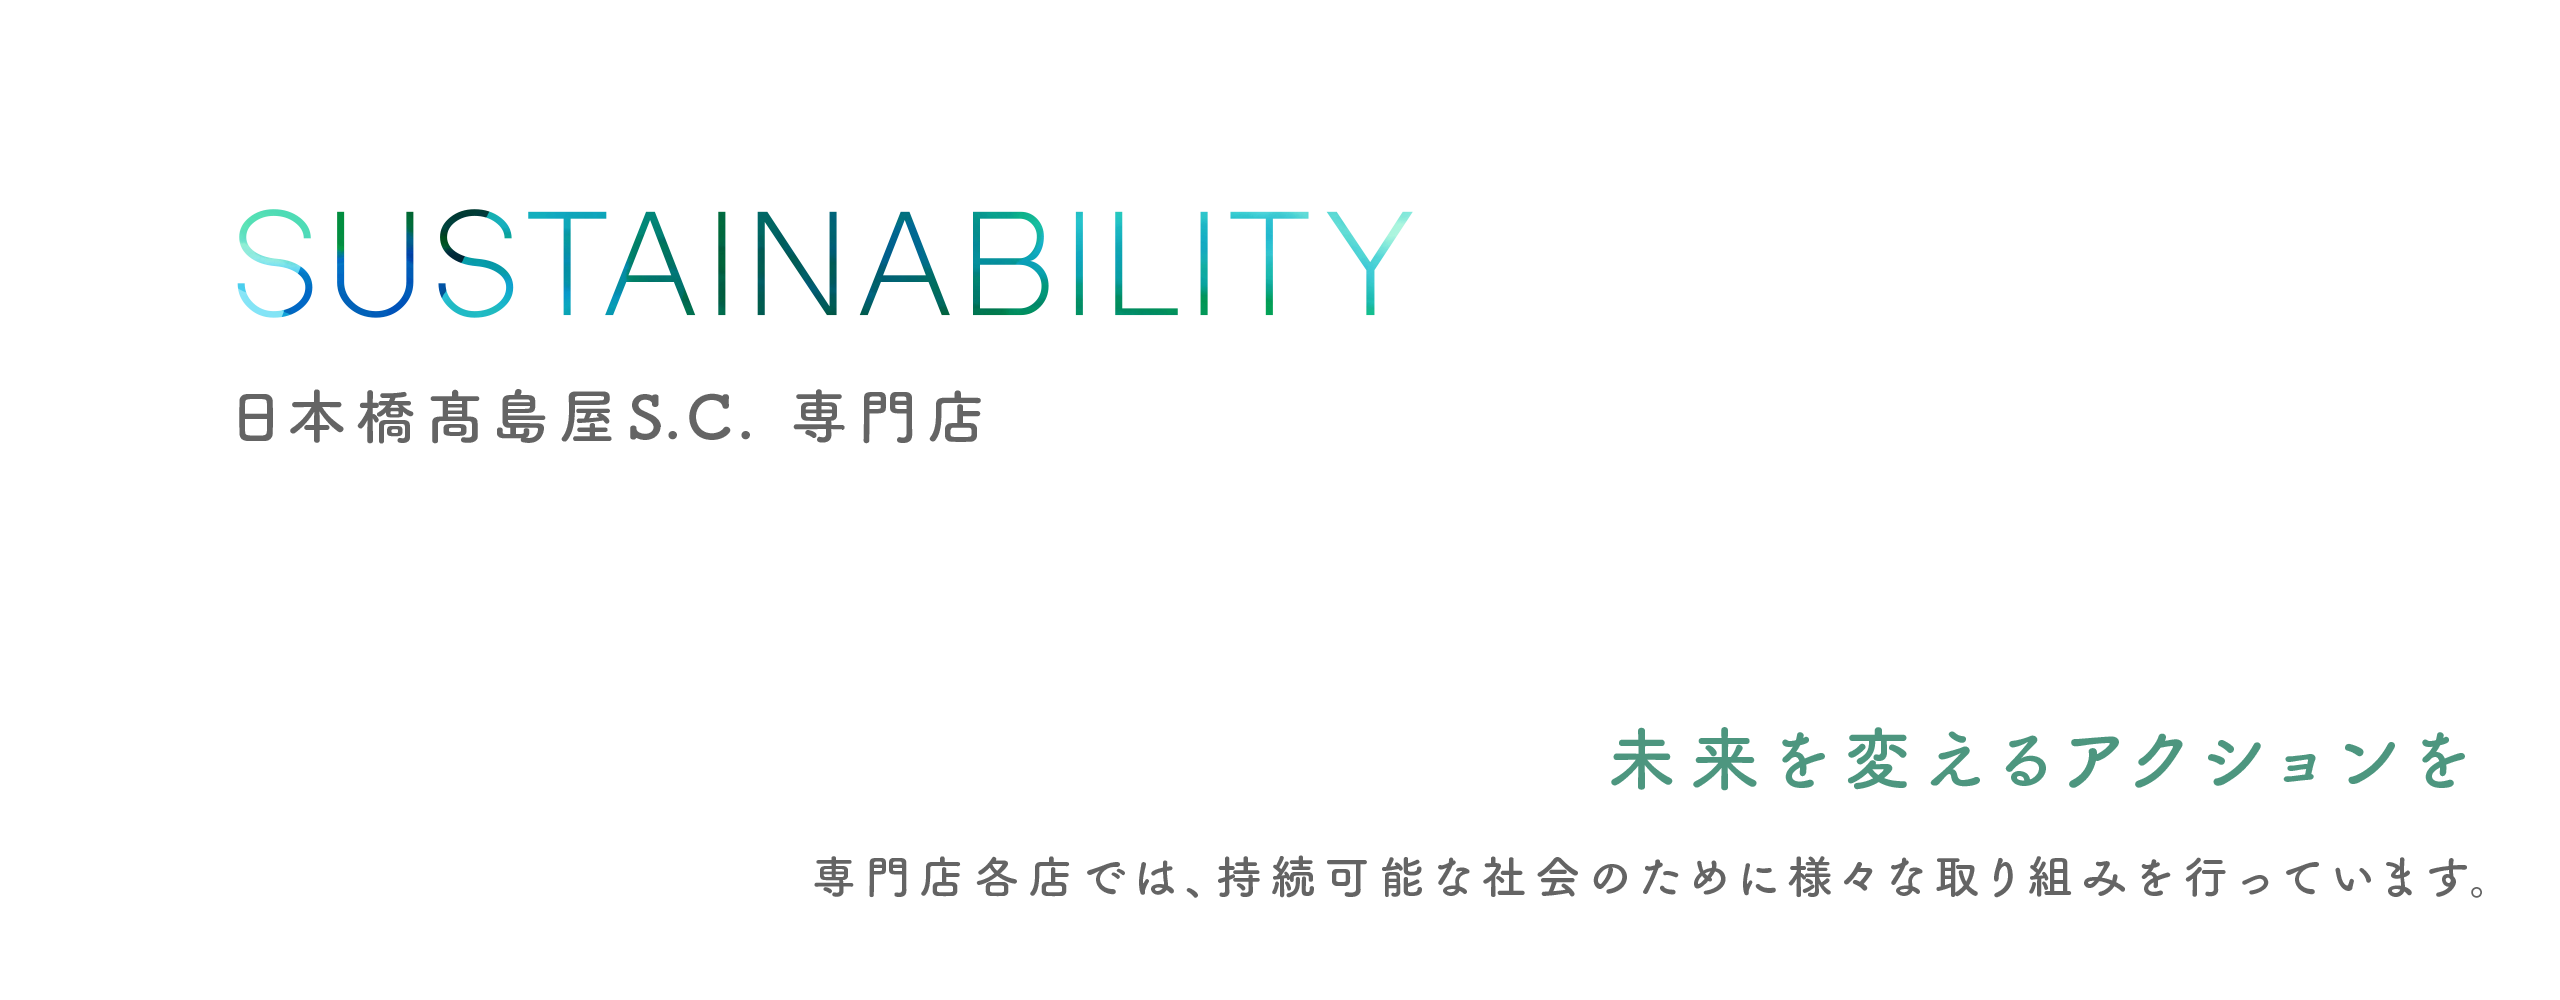 SUSTAINABILITY 日本橋髙島屋S.C. 専門店 SDGsへの取り組み 未来を変えるアクションを 専門店各店では、持続可能な社会のために様々な取り組みを行っています。